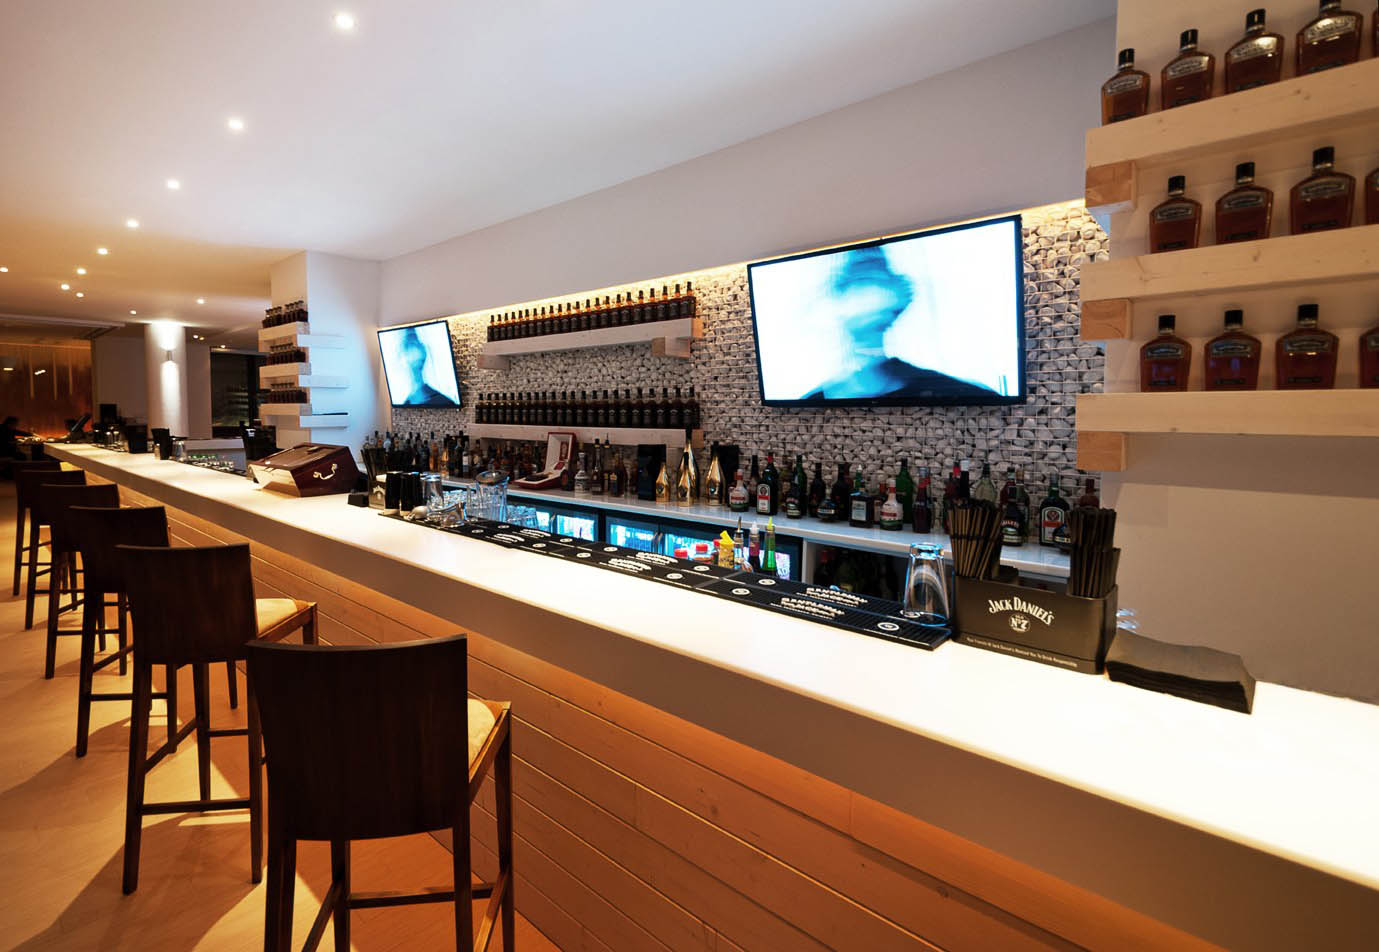 restaurant bar design commercial wine services counter